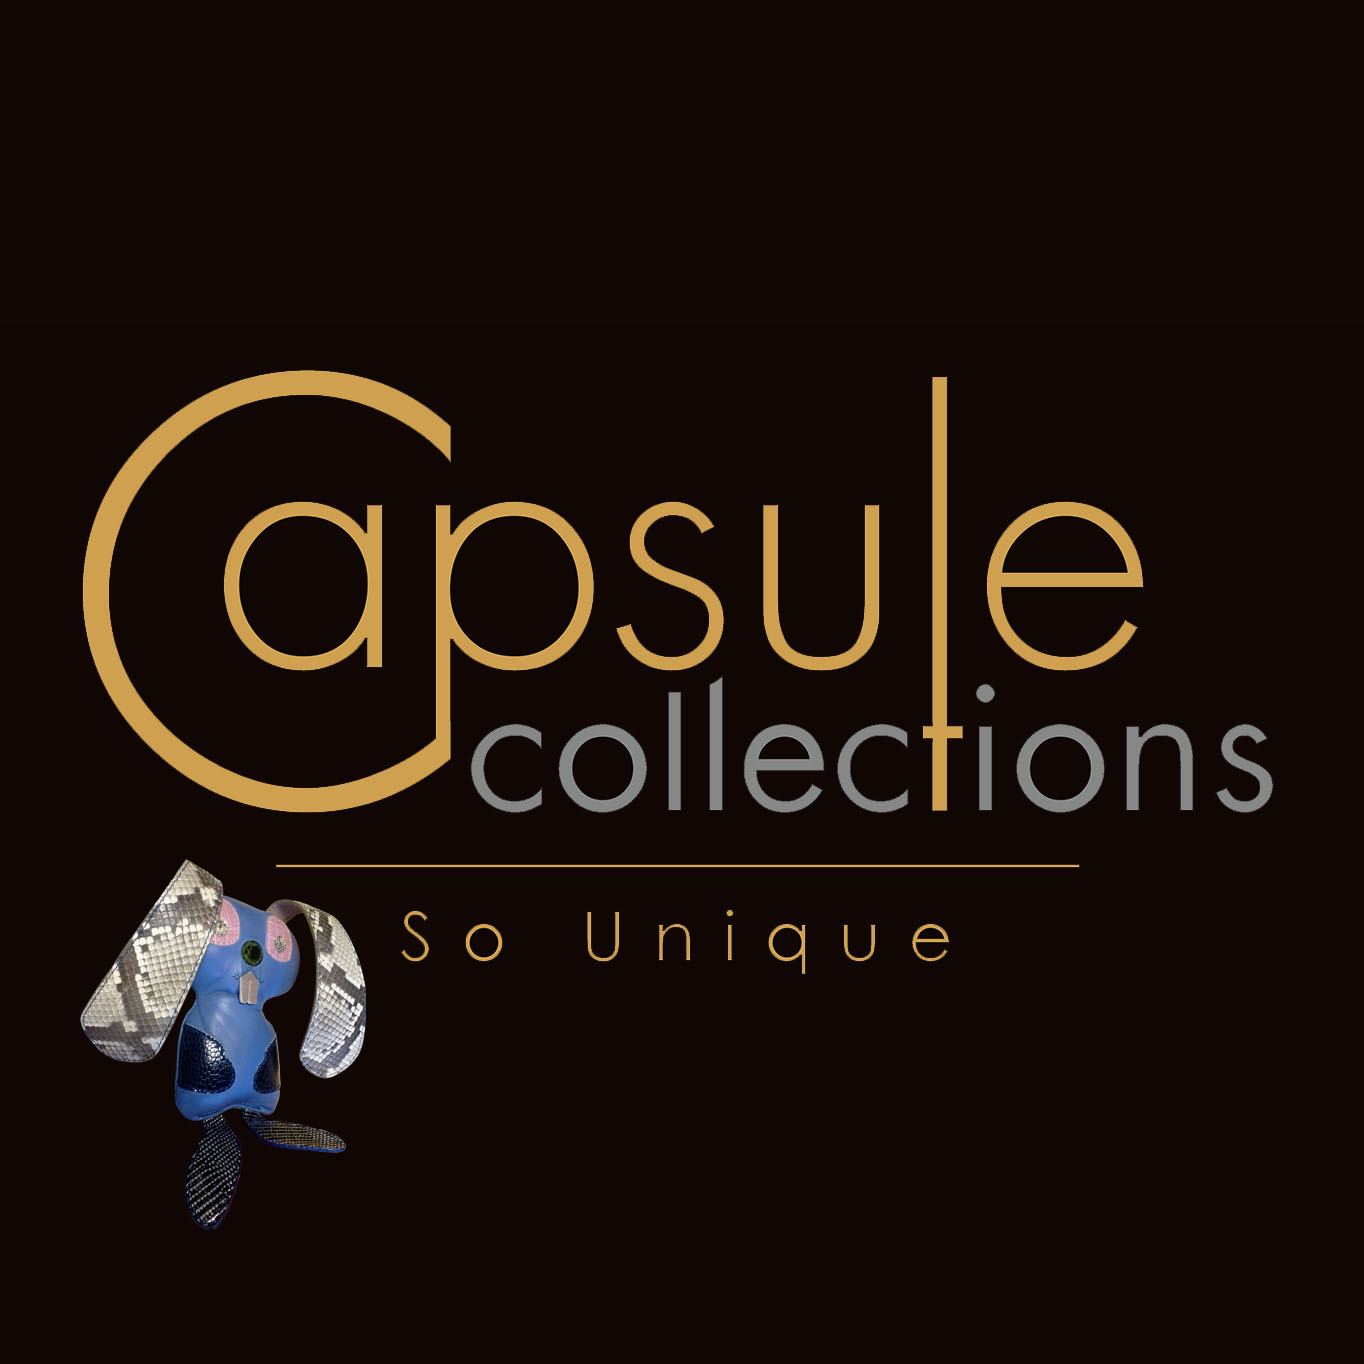 (c) Capsule-collections.com